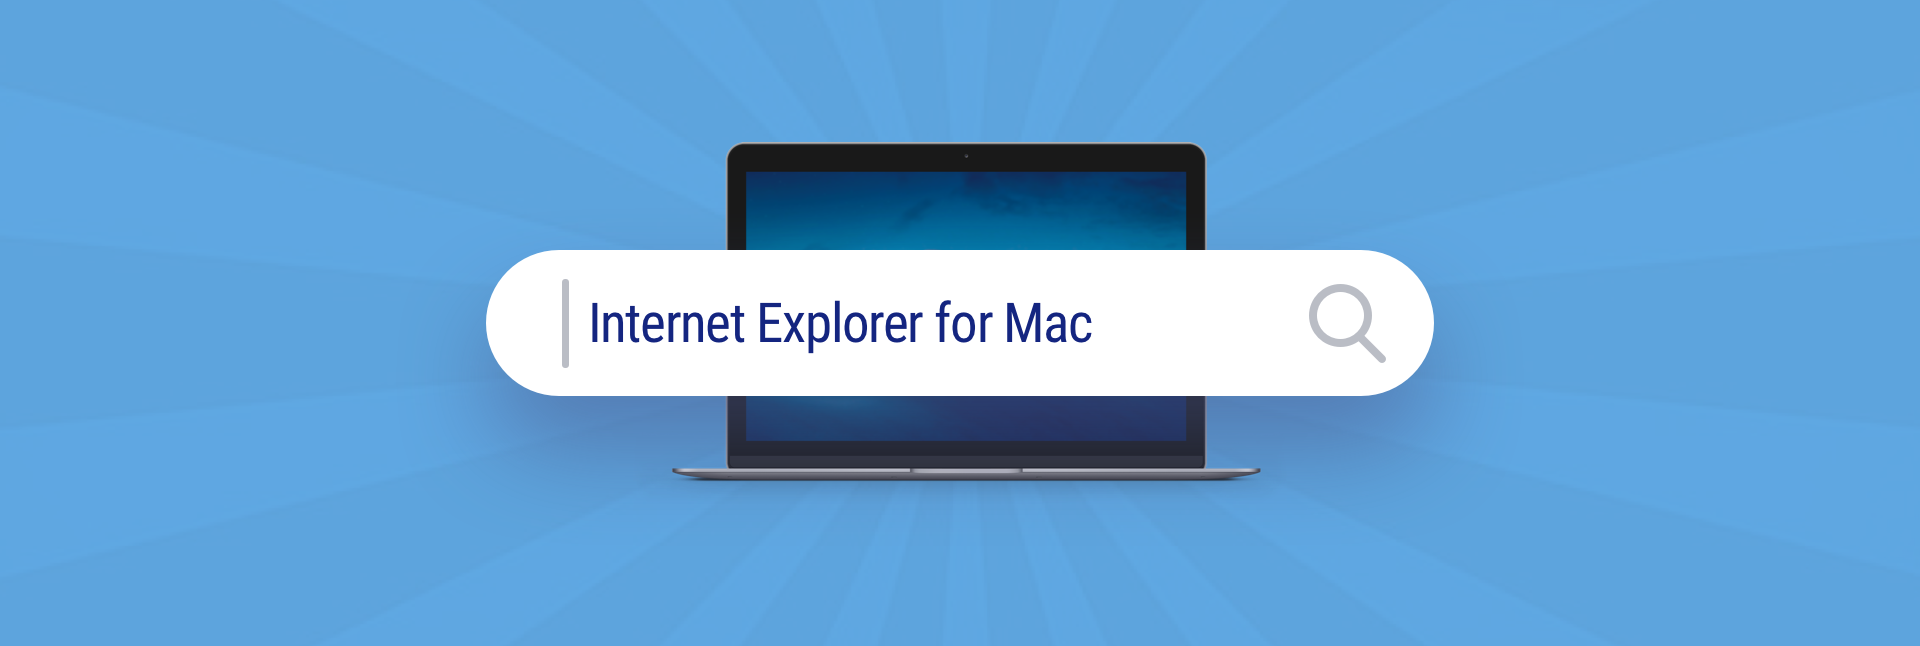 tomcat compatible internet explorer for mac